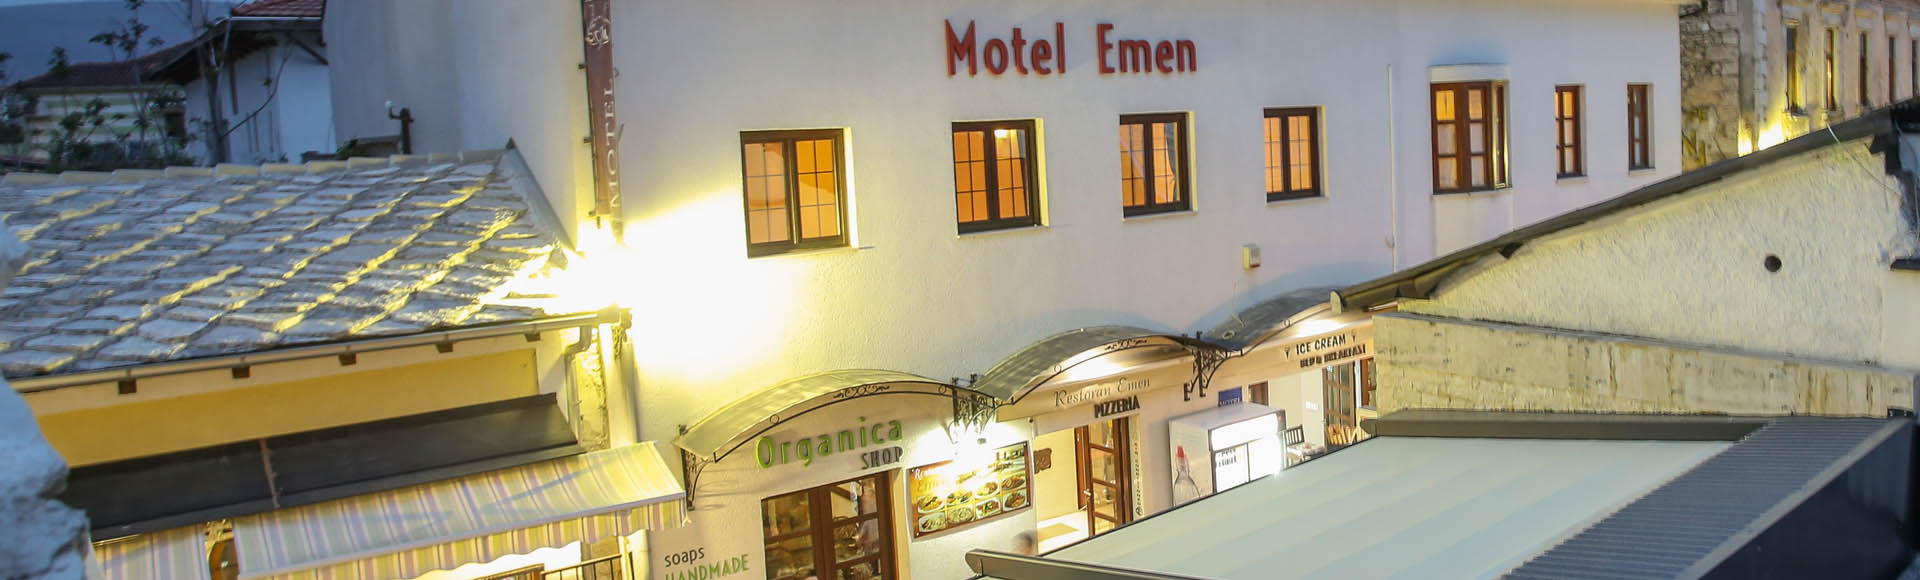 Hotel Emen